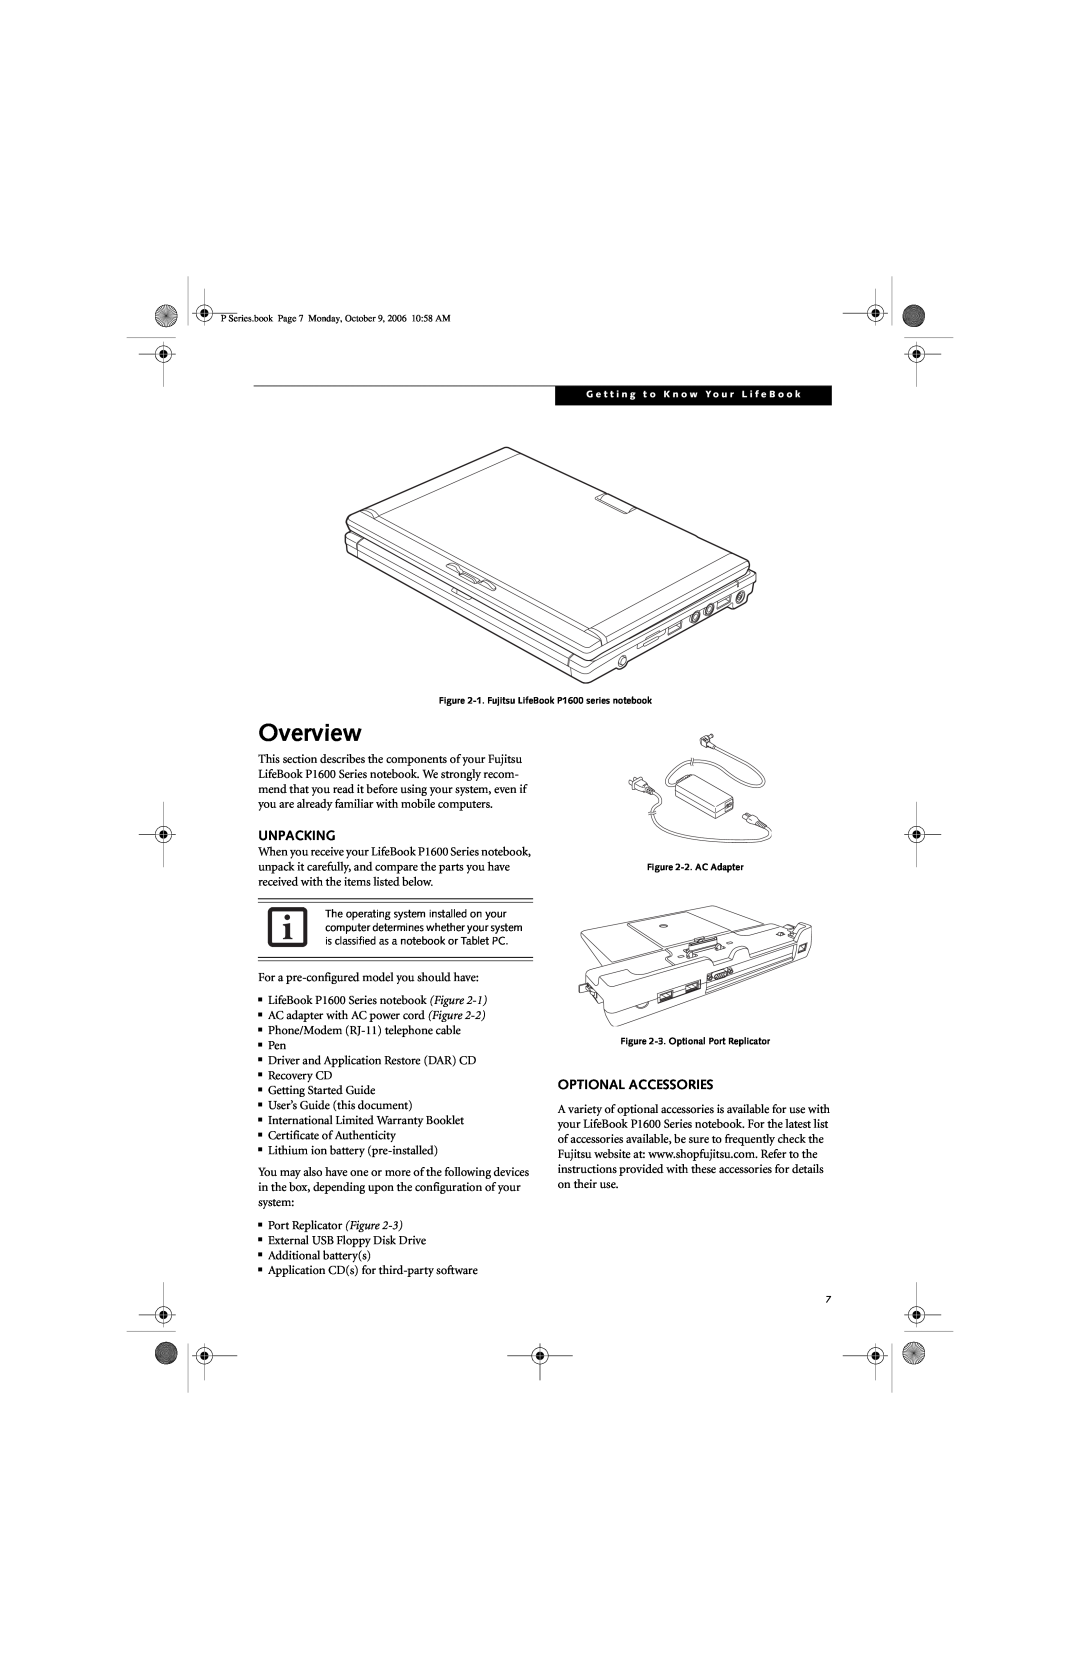 Fujitsu P1610 manual Overview, Unpacking, Optional Accessories 